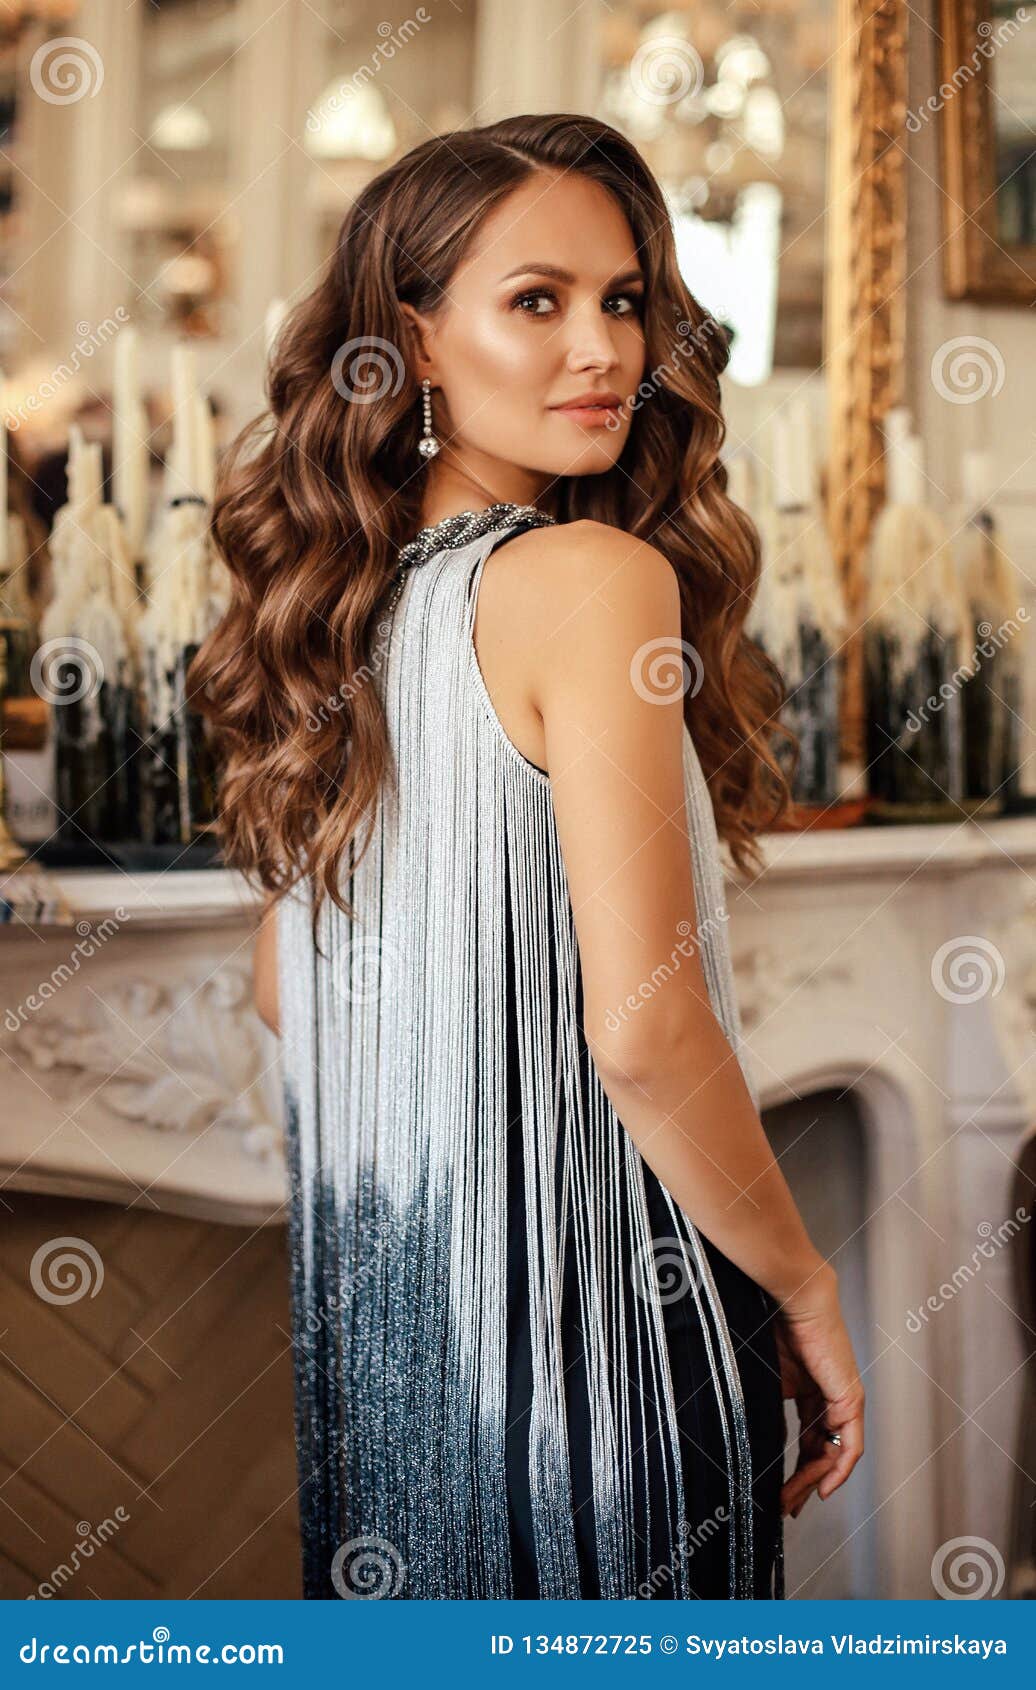 Beautiful Woman With Dark Hair In Elegant Dress Posing In